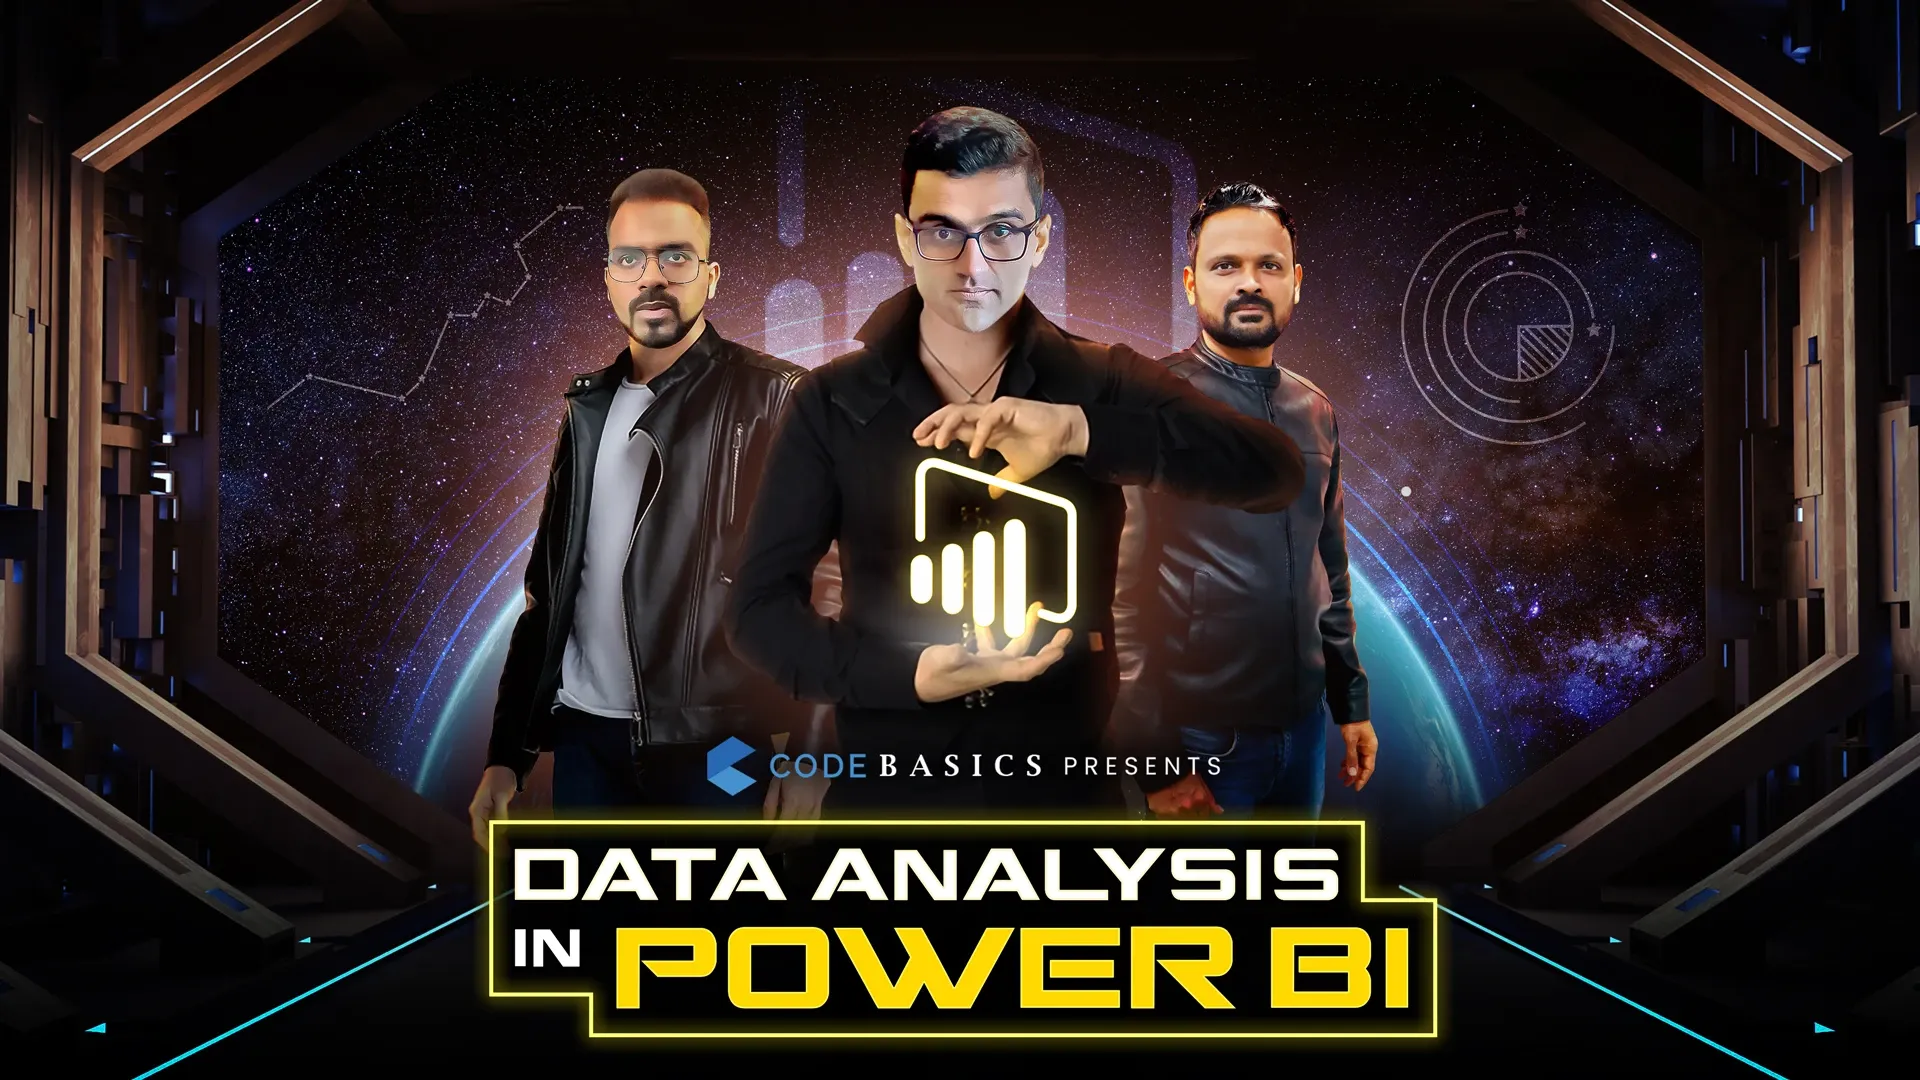 Get Job Ready: Power BI Data Analytics for All Levels